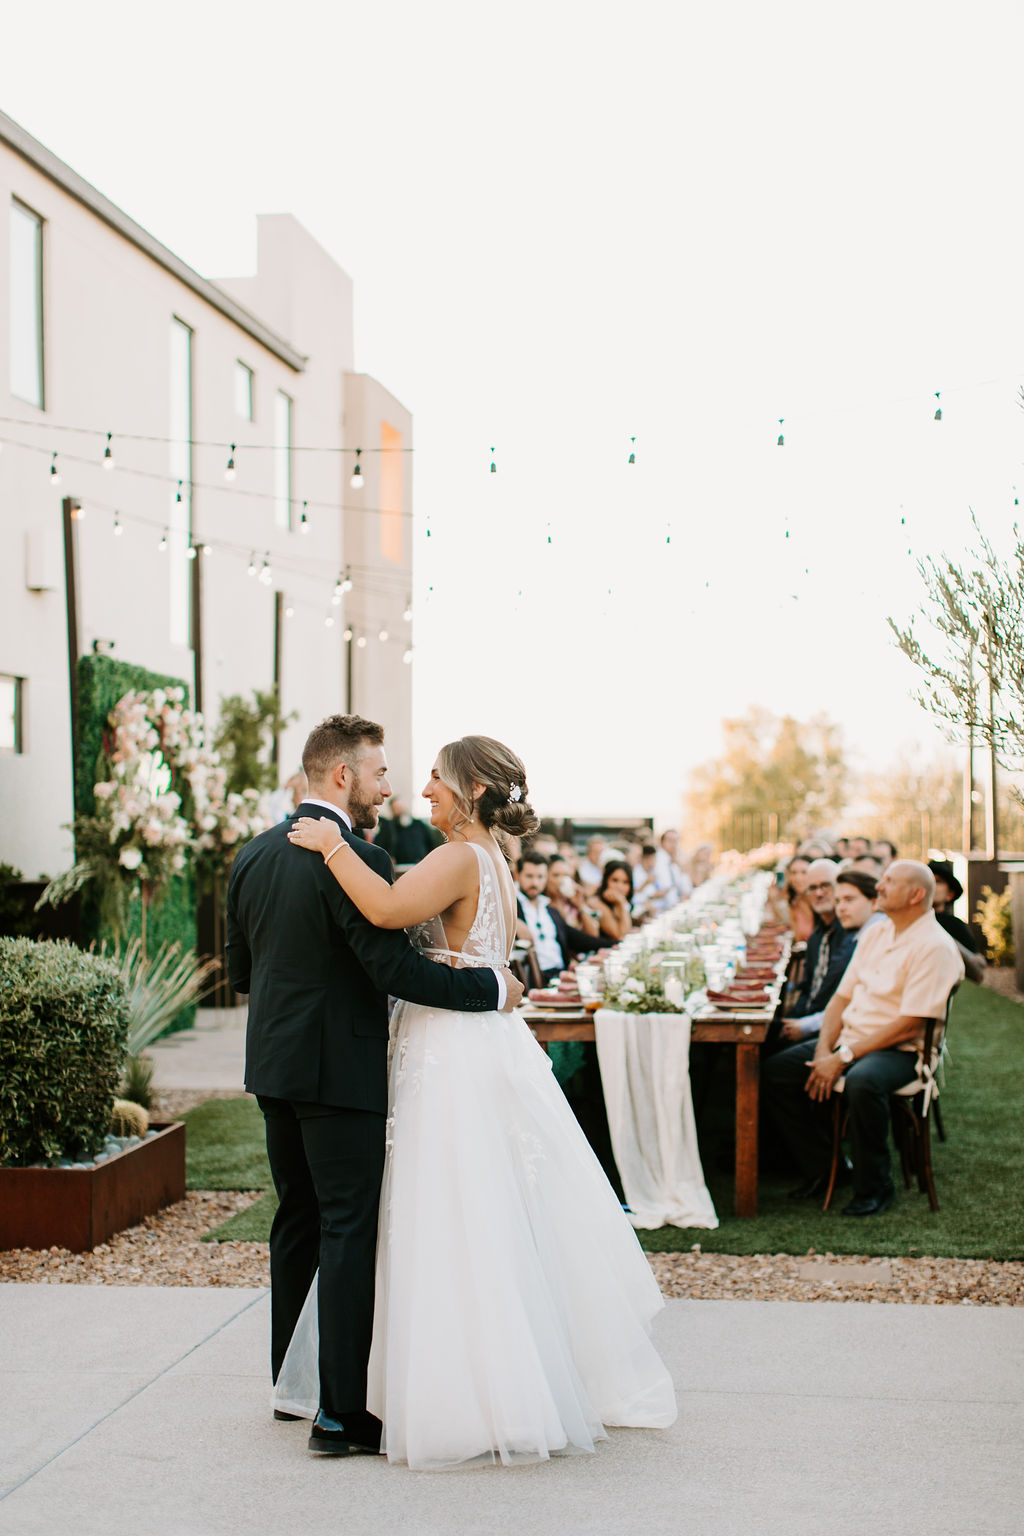 Bride and Groom do first dance for Romantic Desert & Backyard Micro-Wedding